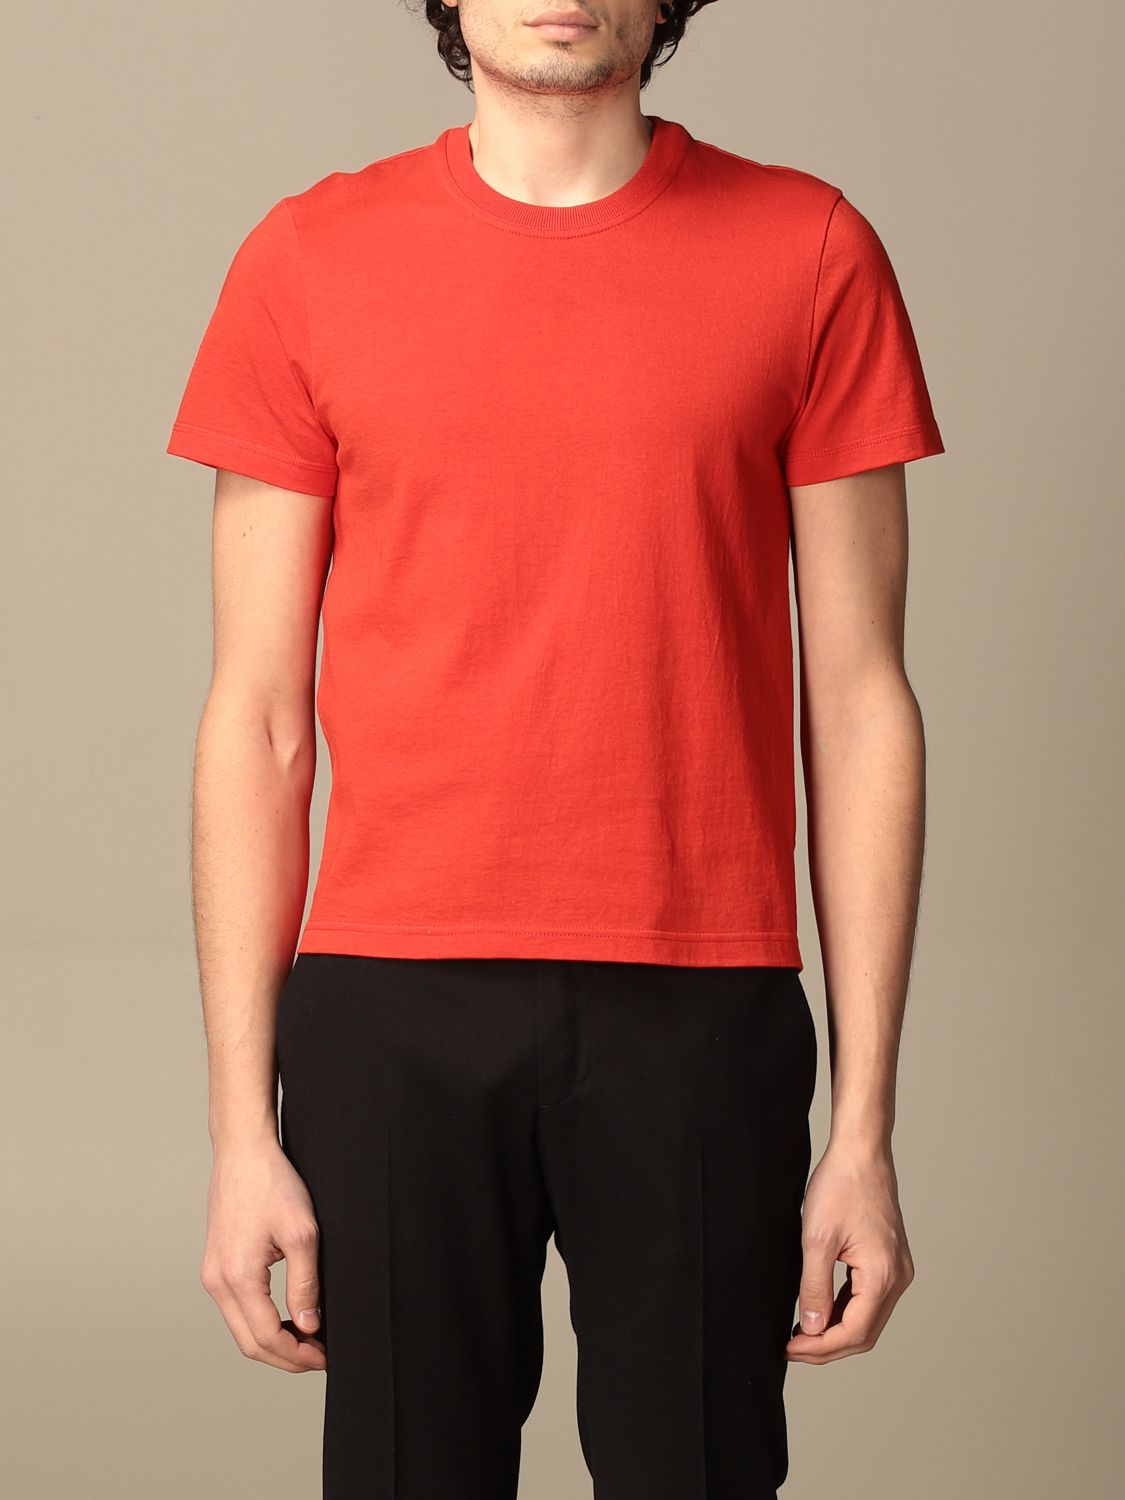 BOTTEGA VENETA: basic cotton T-shirt - Red | Bottega Veneta t-shirt ...